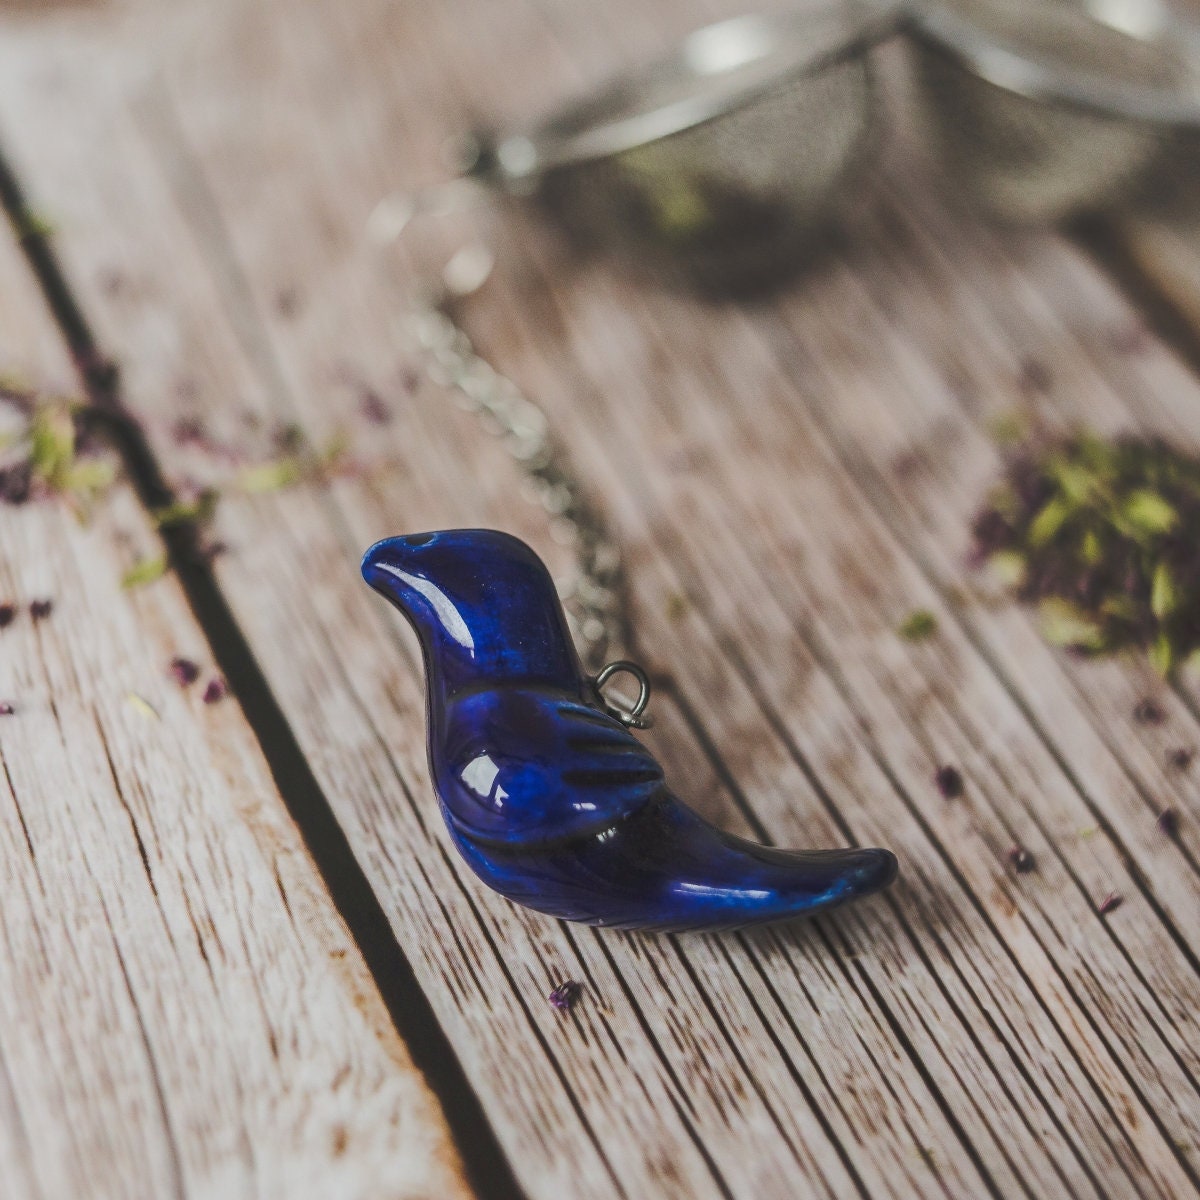 Tea strainer with ceramic dark blue bird - Loose leaf tea infuser with blue bird charm - Christmas gift